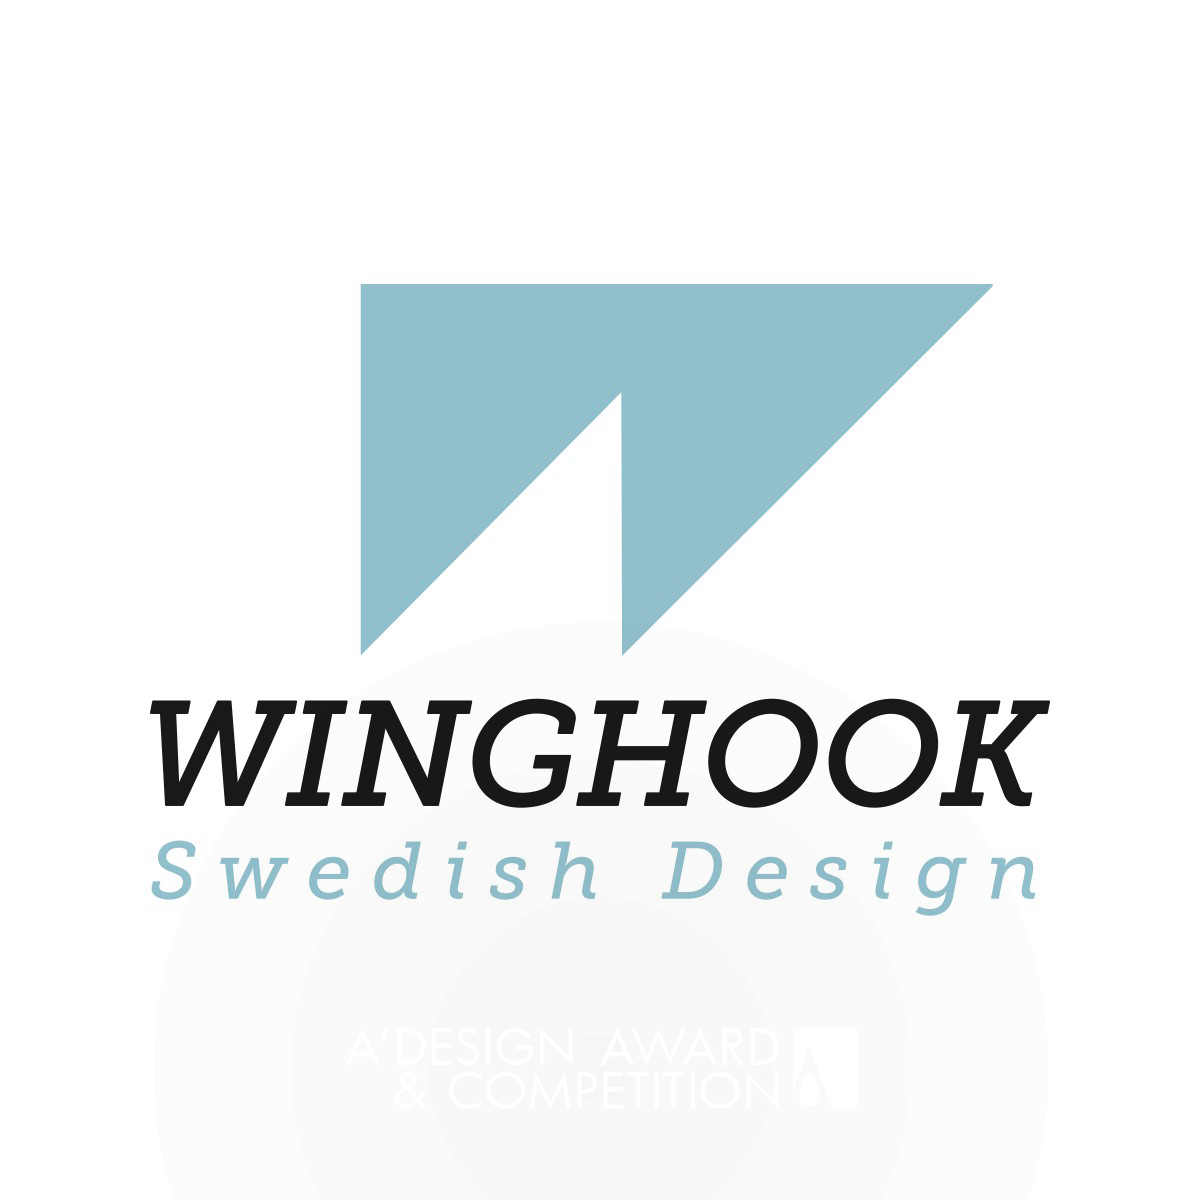 Winghook Branding System Corporate Identity